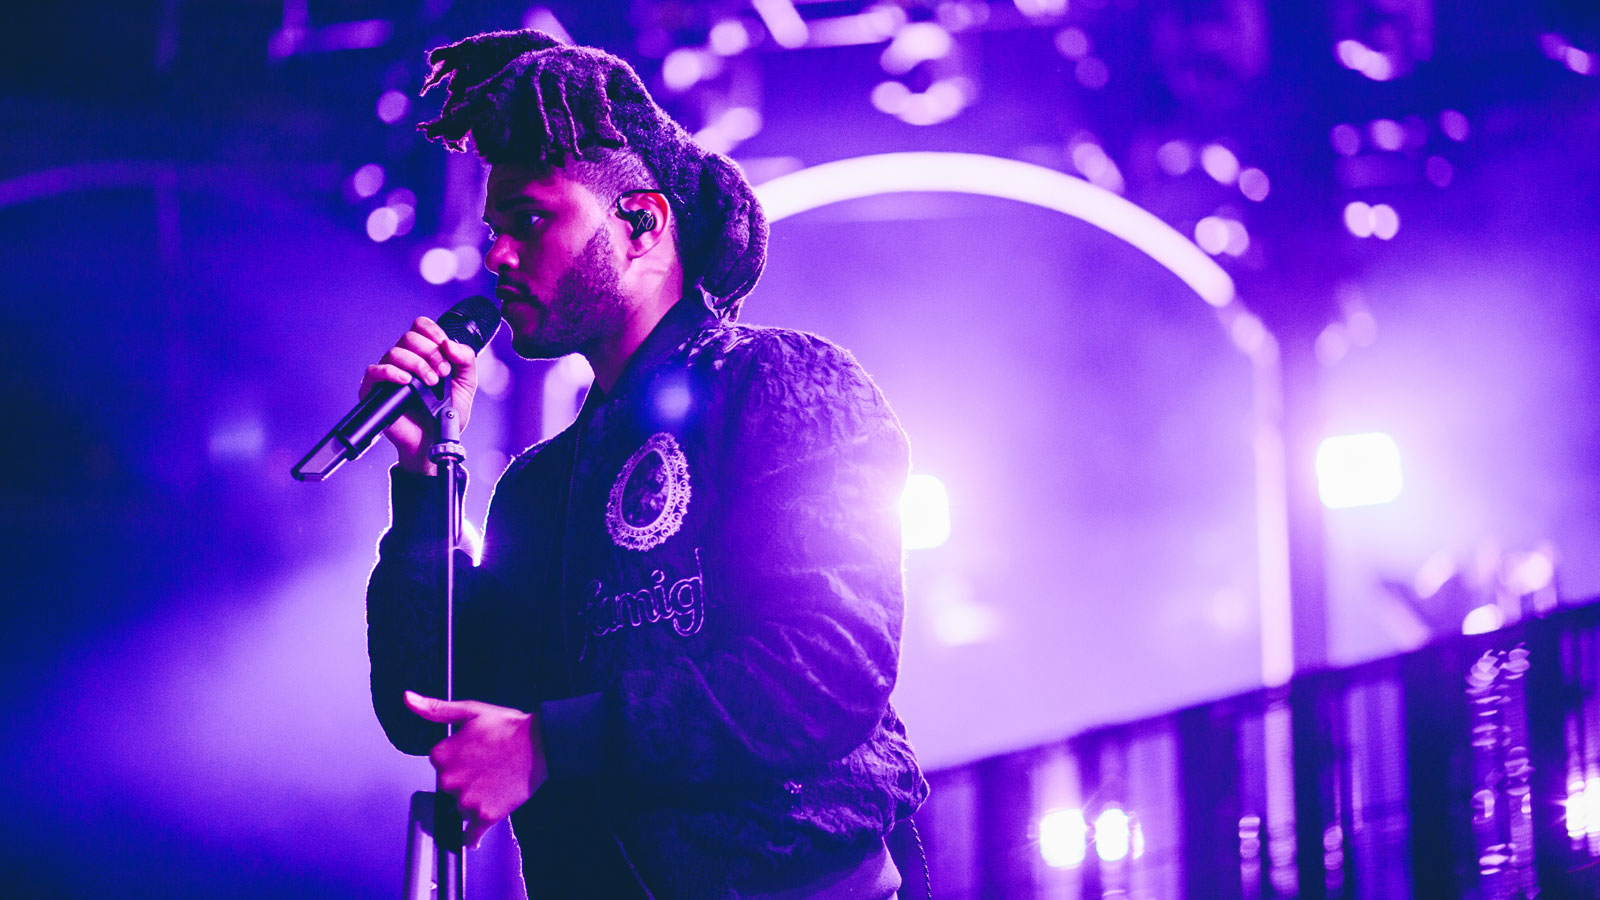 The Weeknd en vivo desde el Apple Music Festival en Londres (Video)